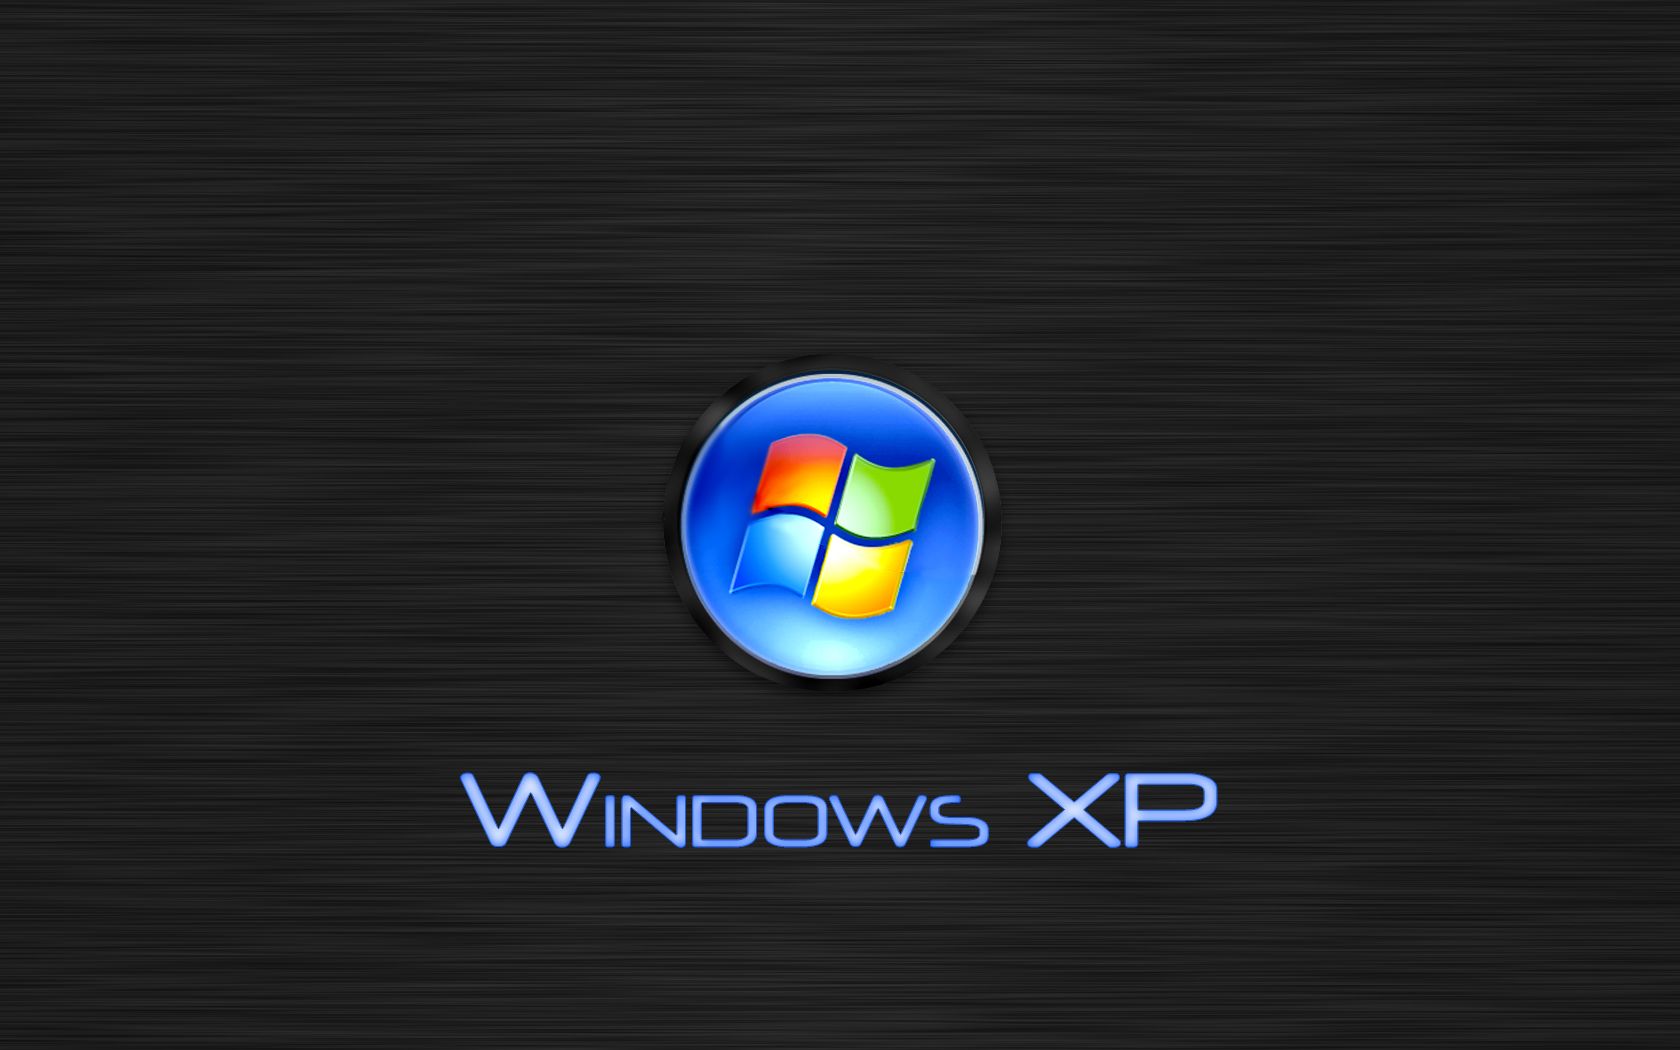 Windows xp black